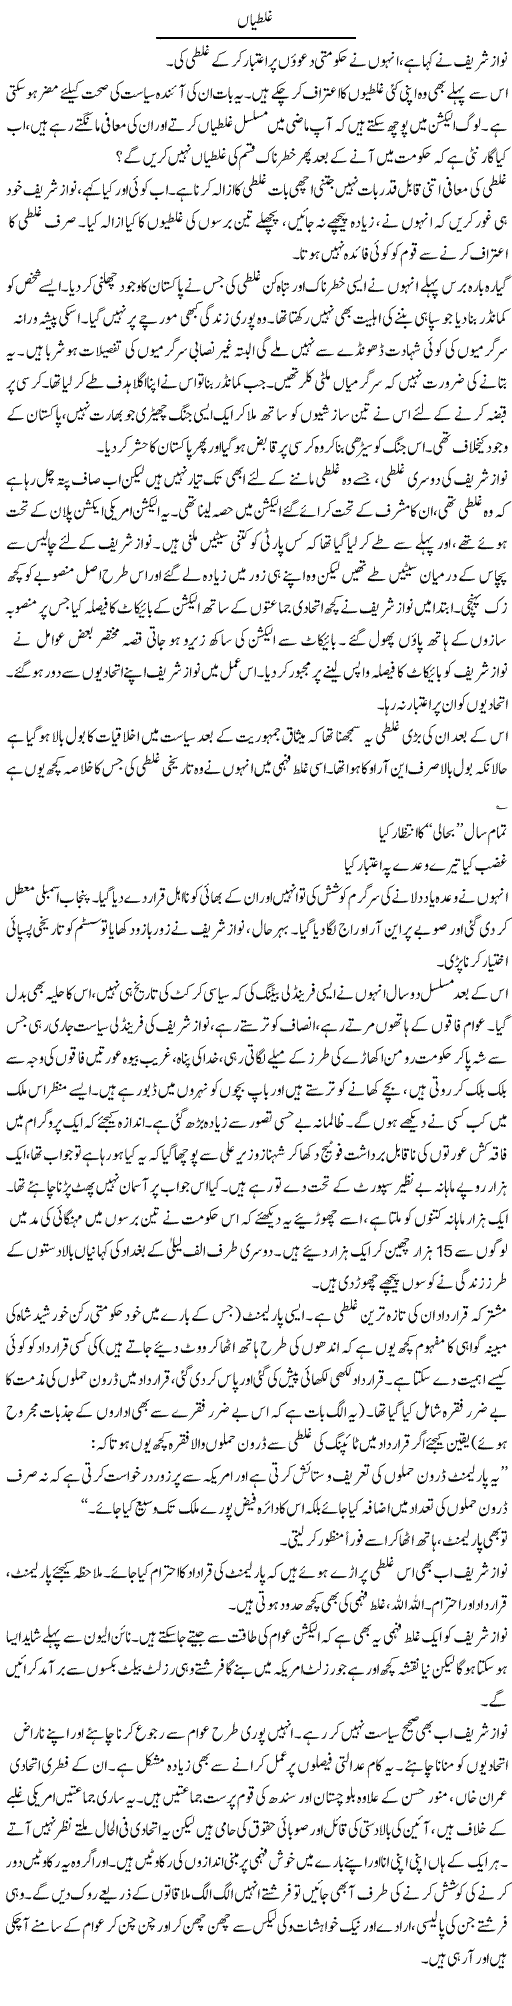 Political Mistakes Express Column Abdullah Tariq 3 June 2011